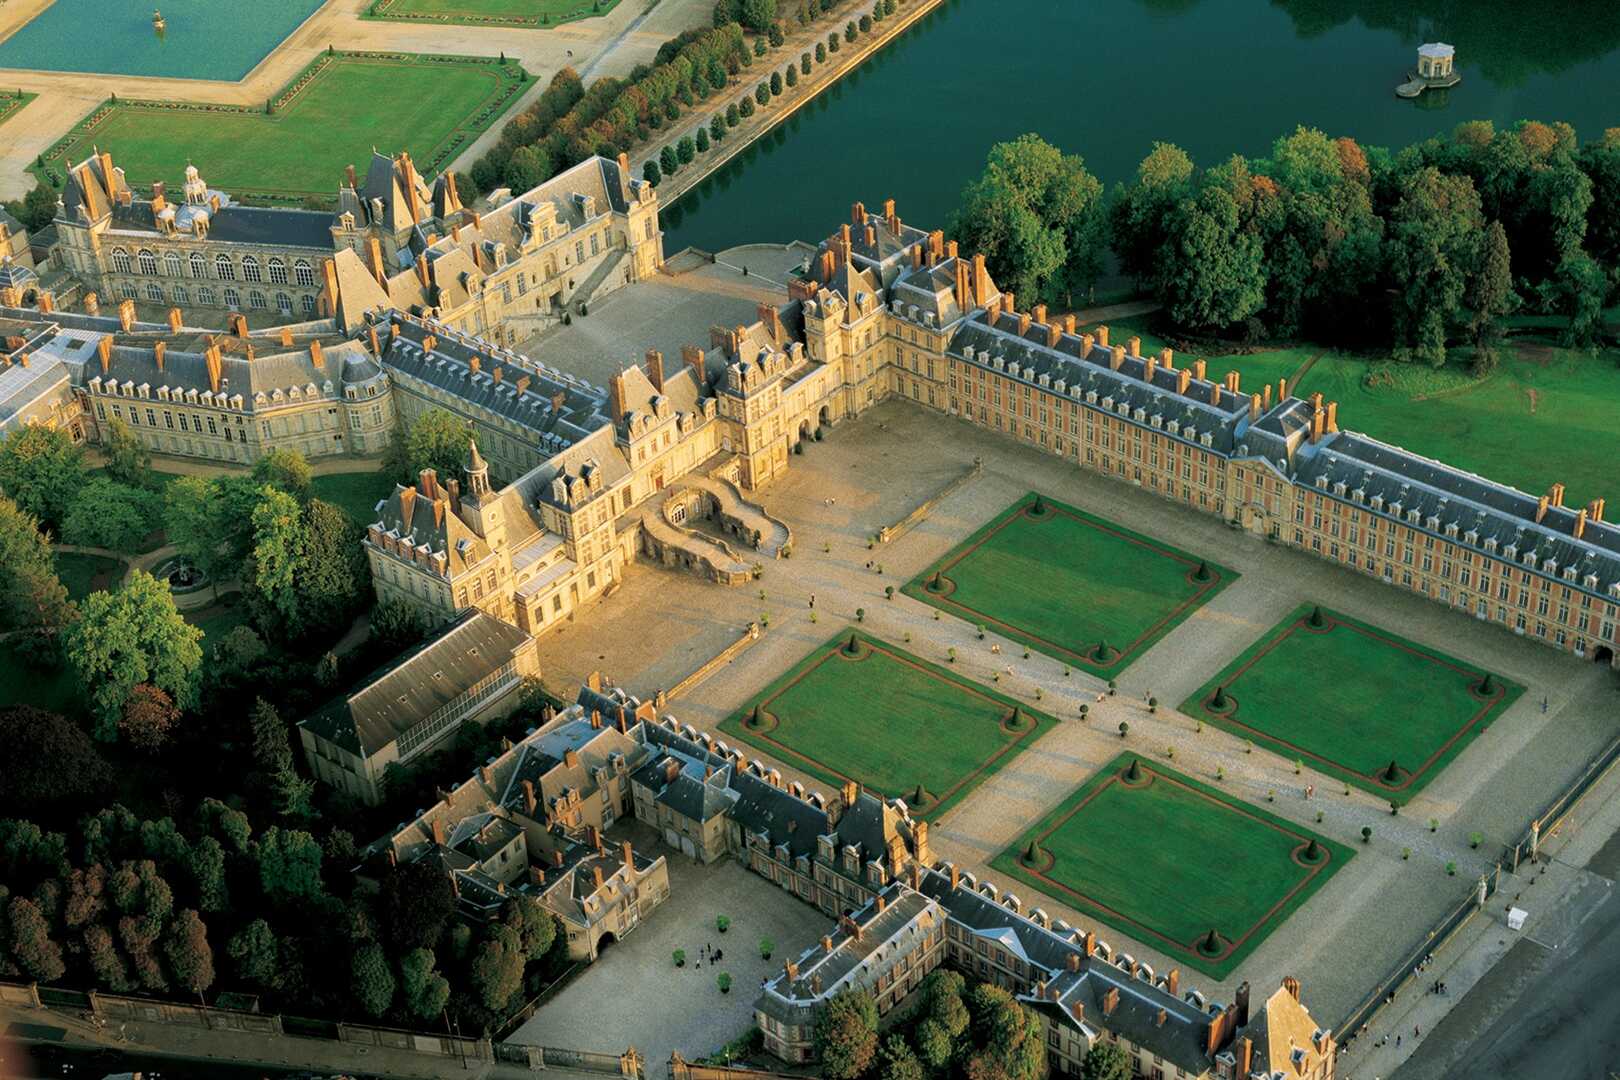 The Château de Fontainebleau